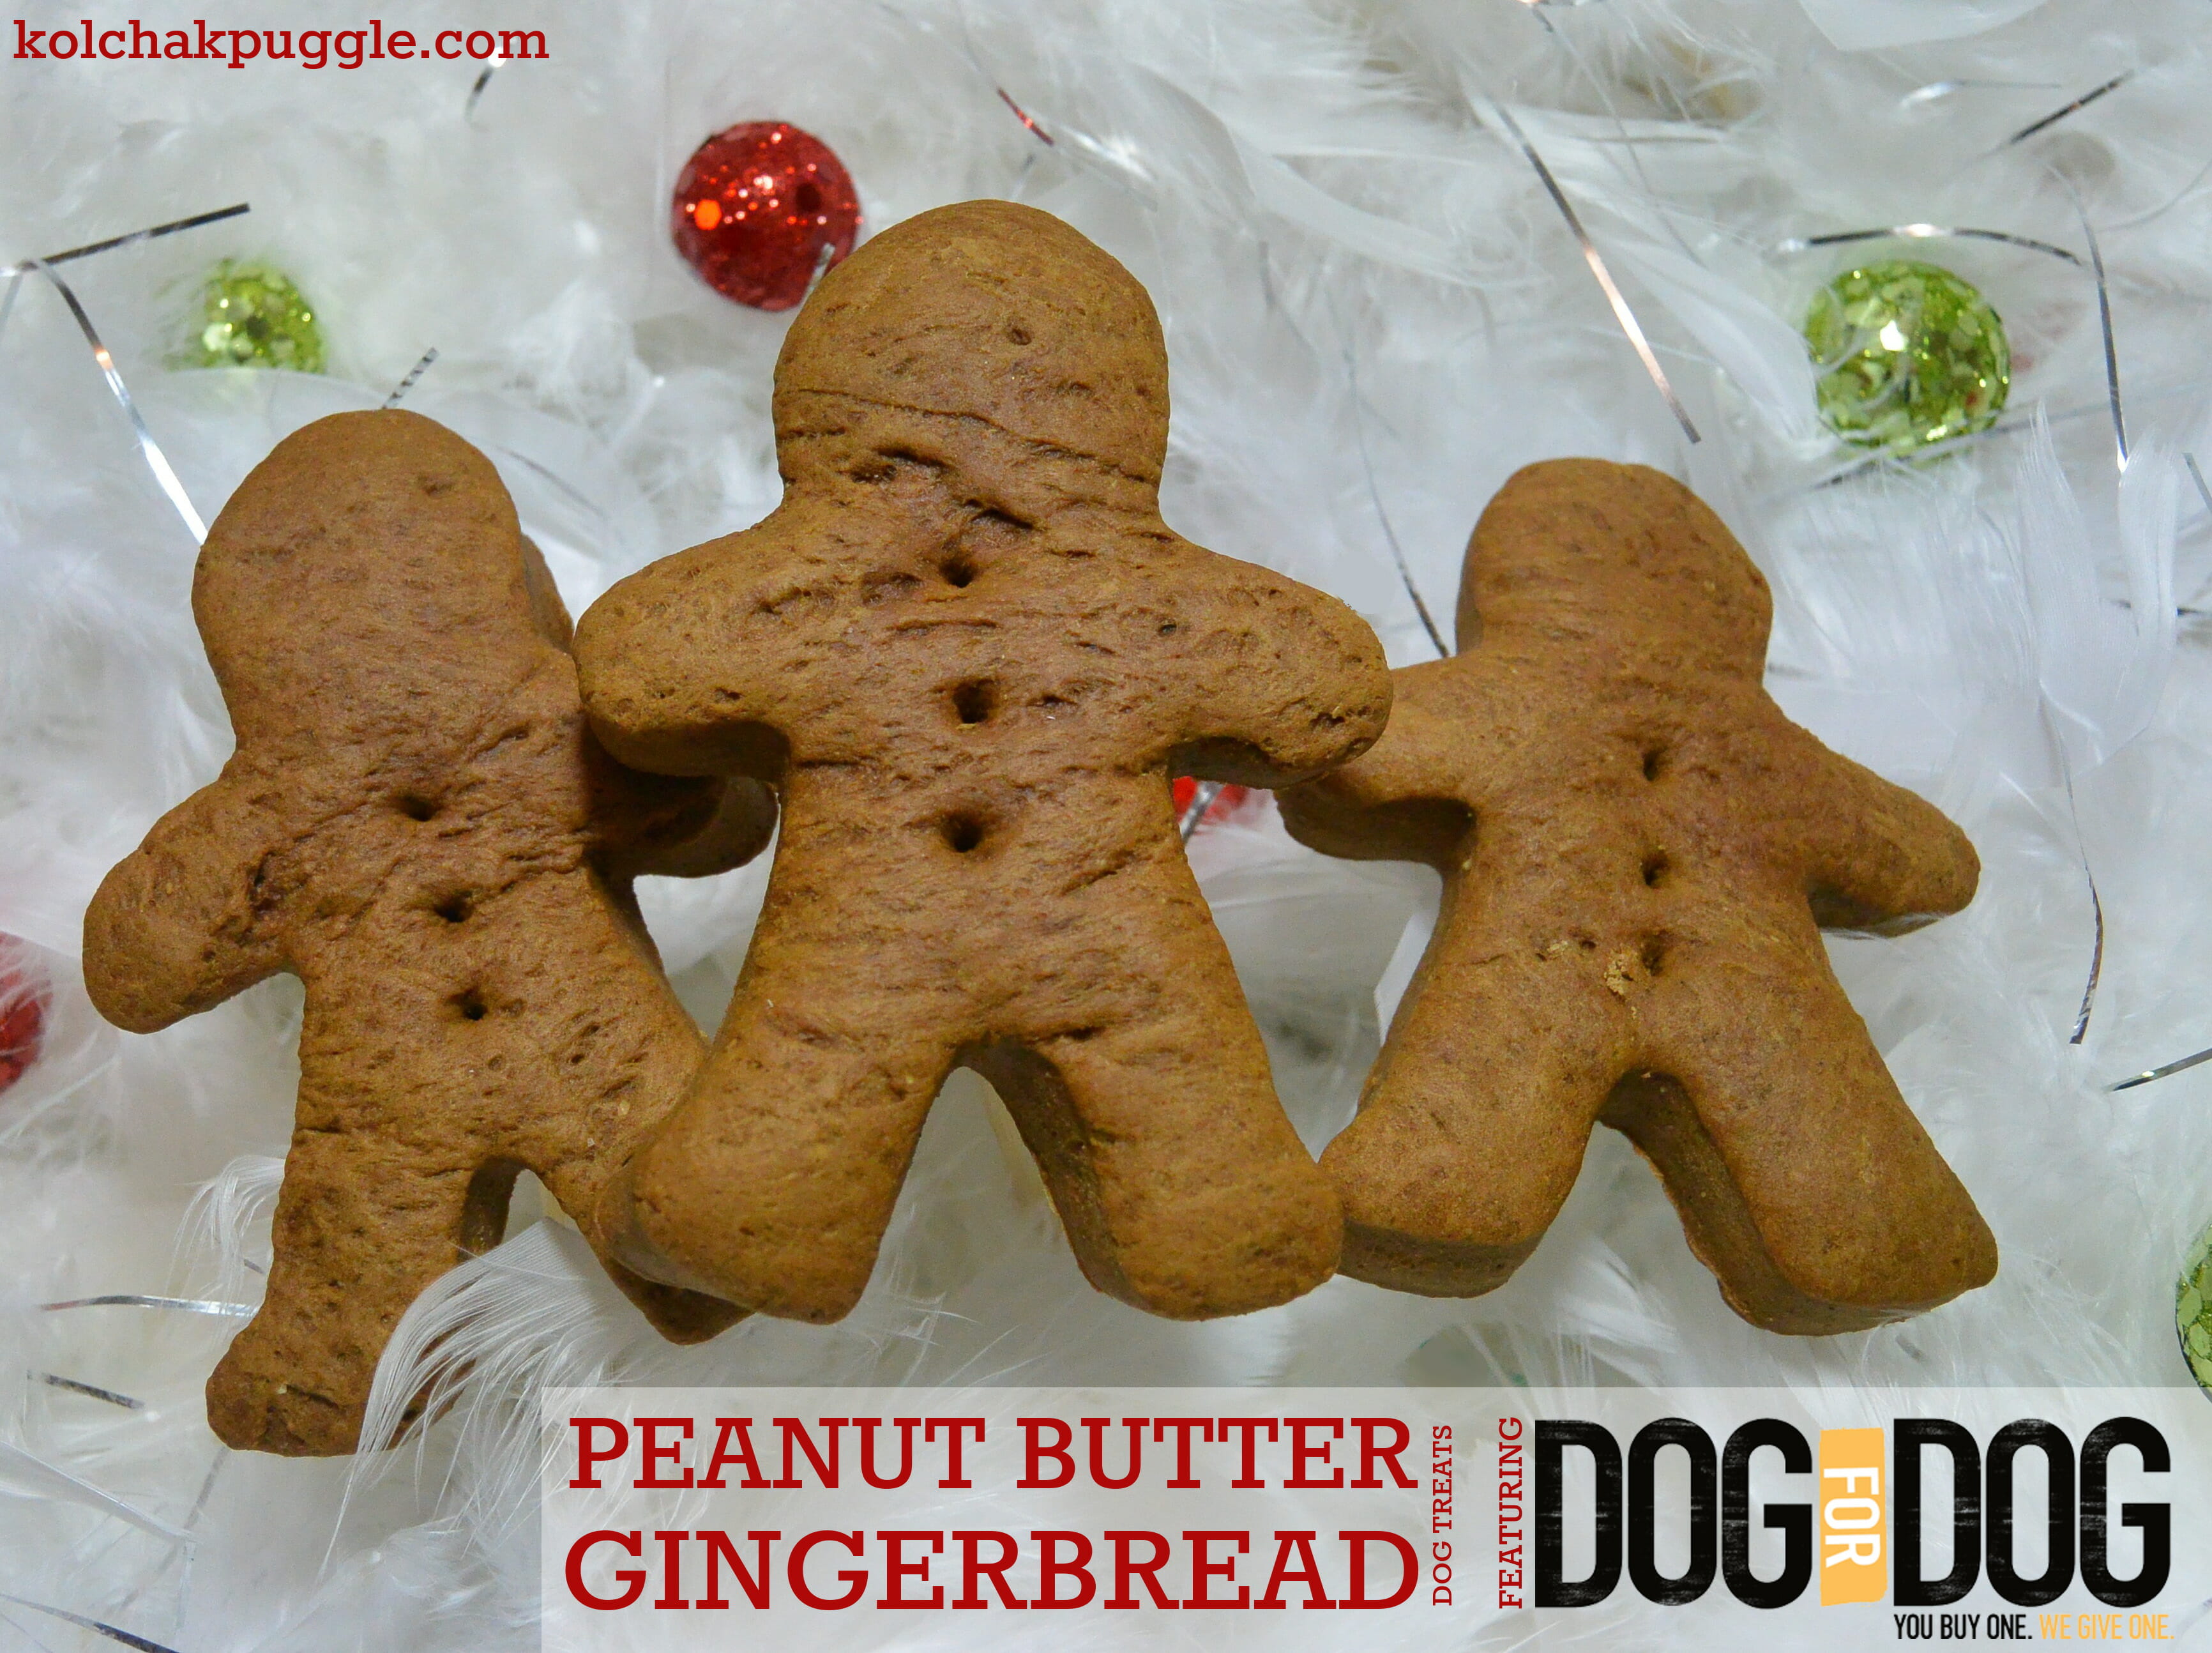 Make Peanut Butter Gingerbread Dog Treats with DOGSBUTTER #DOGforDOGPetSmart